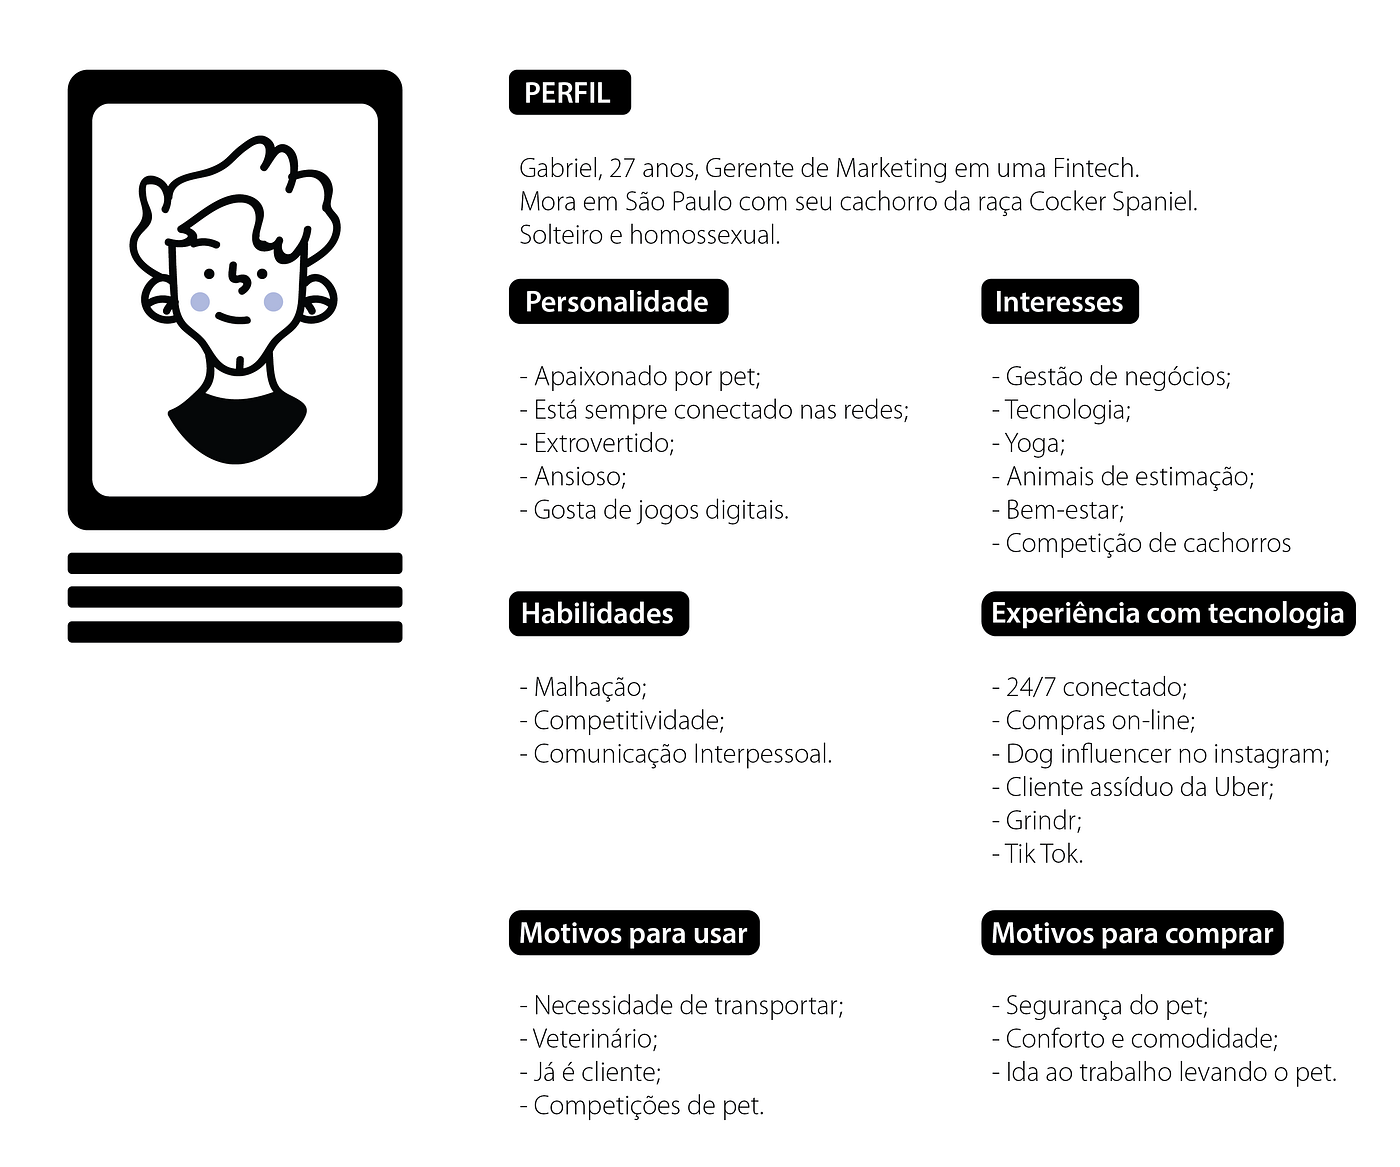 Redesign Globoplay: UX/UI Case. Projeto de redesign da plataforma de…, by  Caio Rabelo